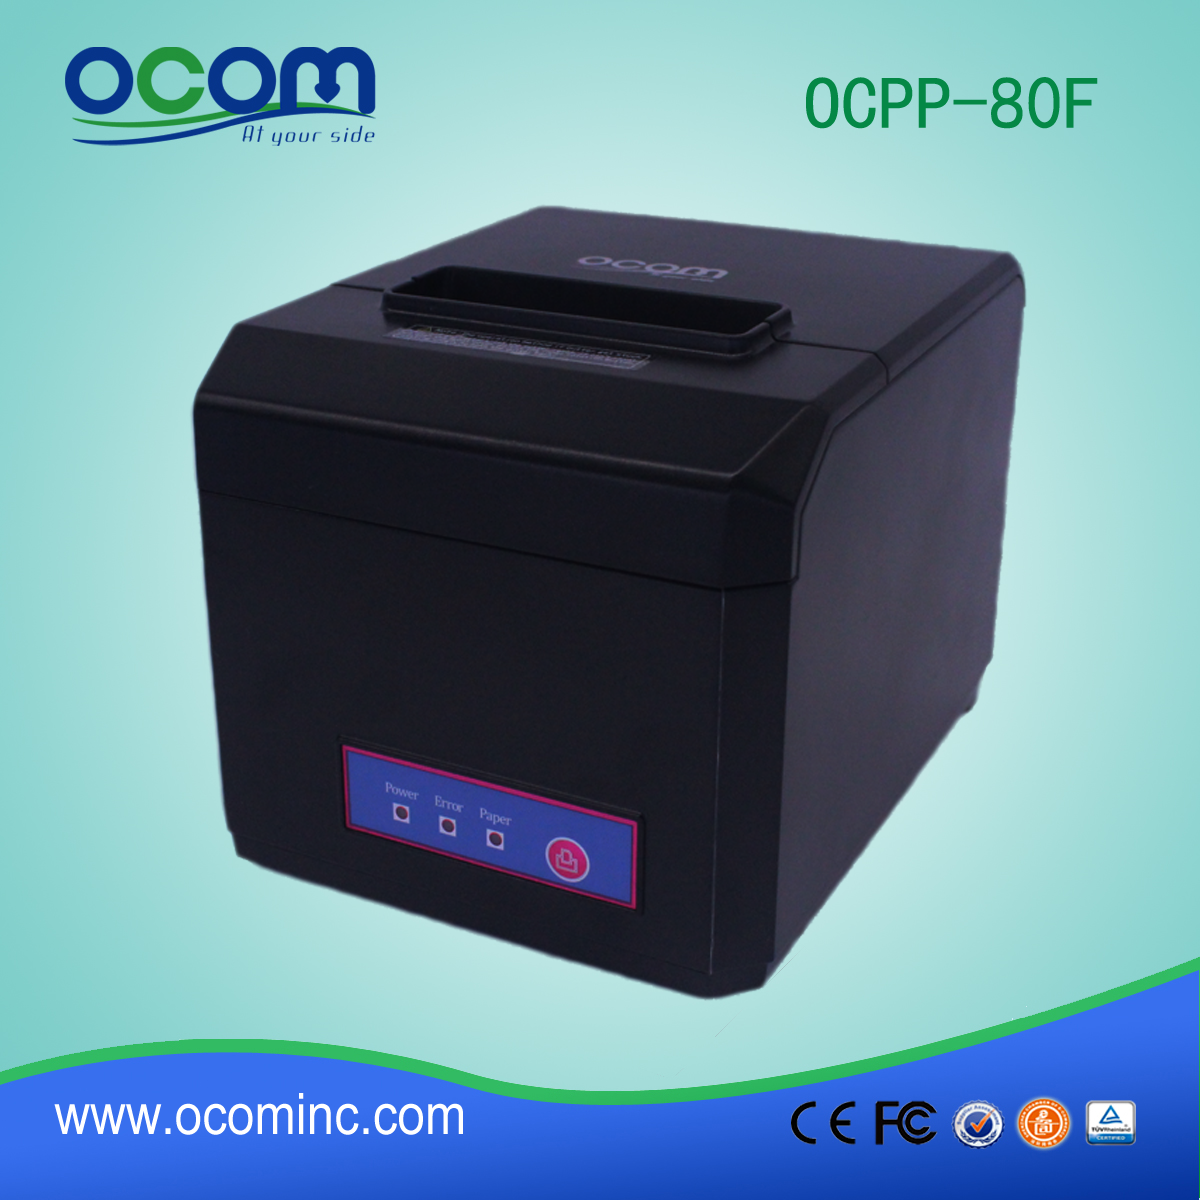 OCPP-80AF: Tanie 3 calowym pos bluetooth termiczna drukarka paragonów dla Android lub IOS